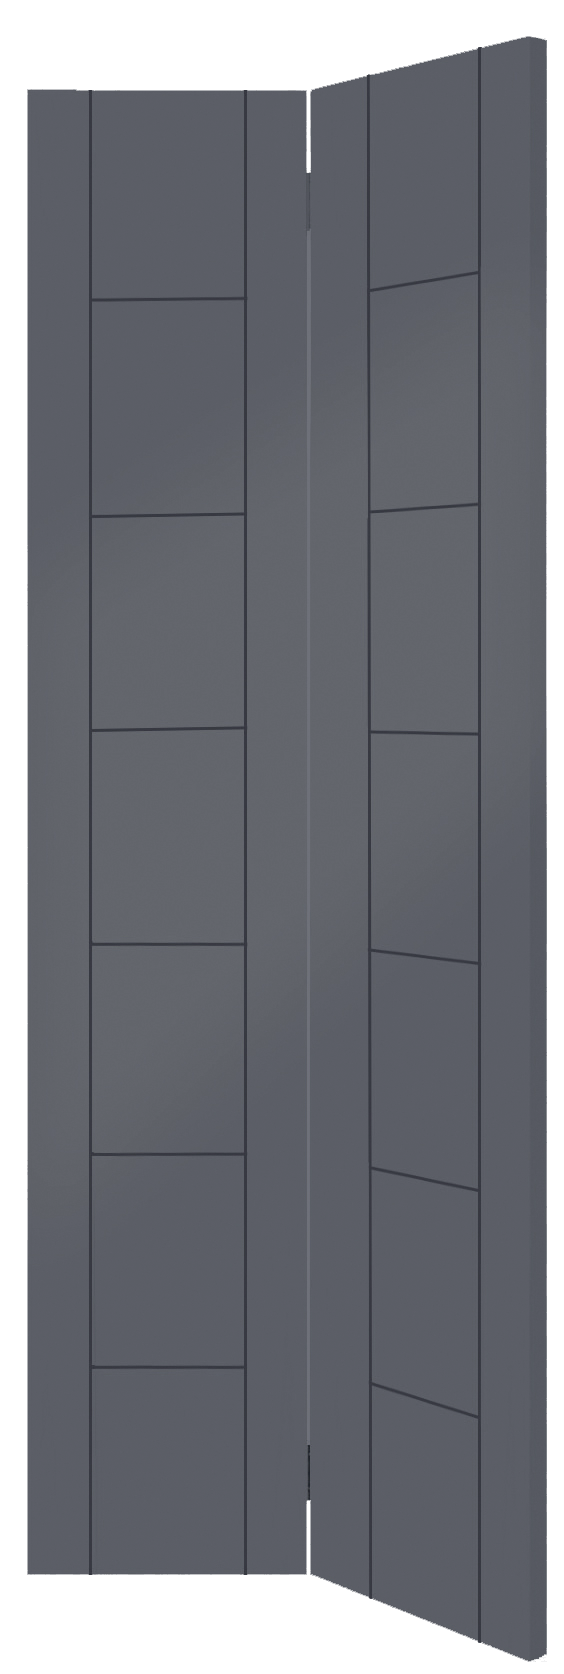 Palermo Internal White Primed Bi-Fold Door – Cinder, 1981 x 762 x 35 mm